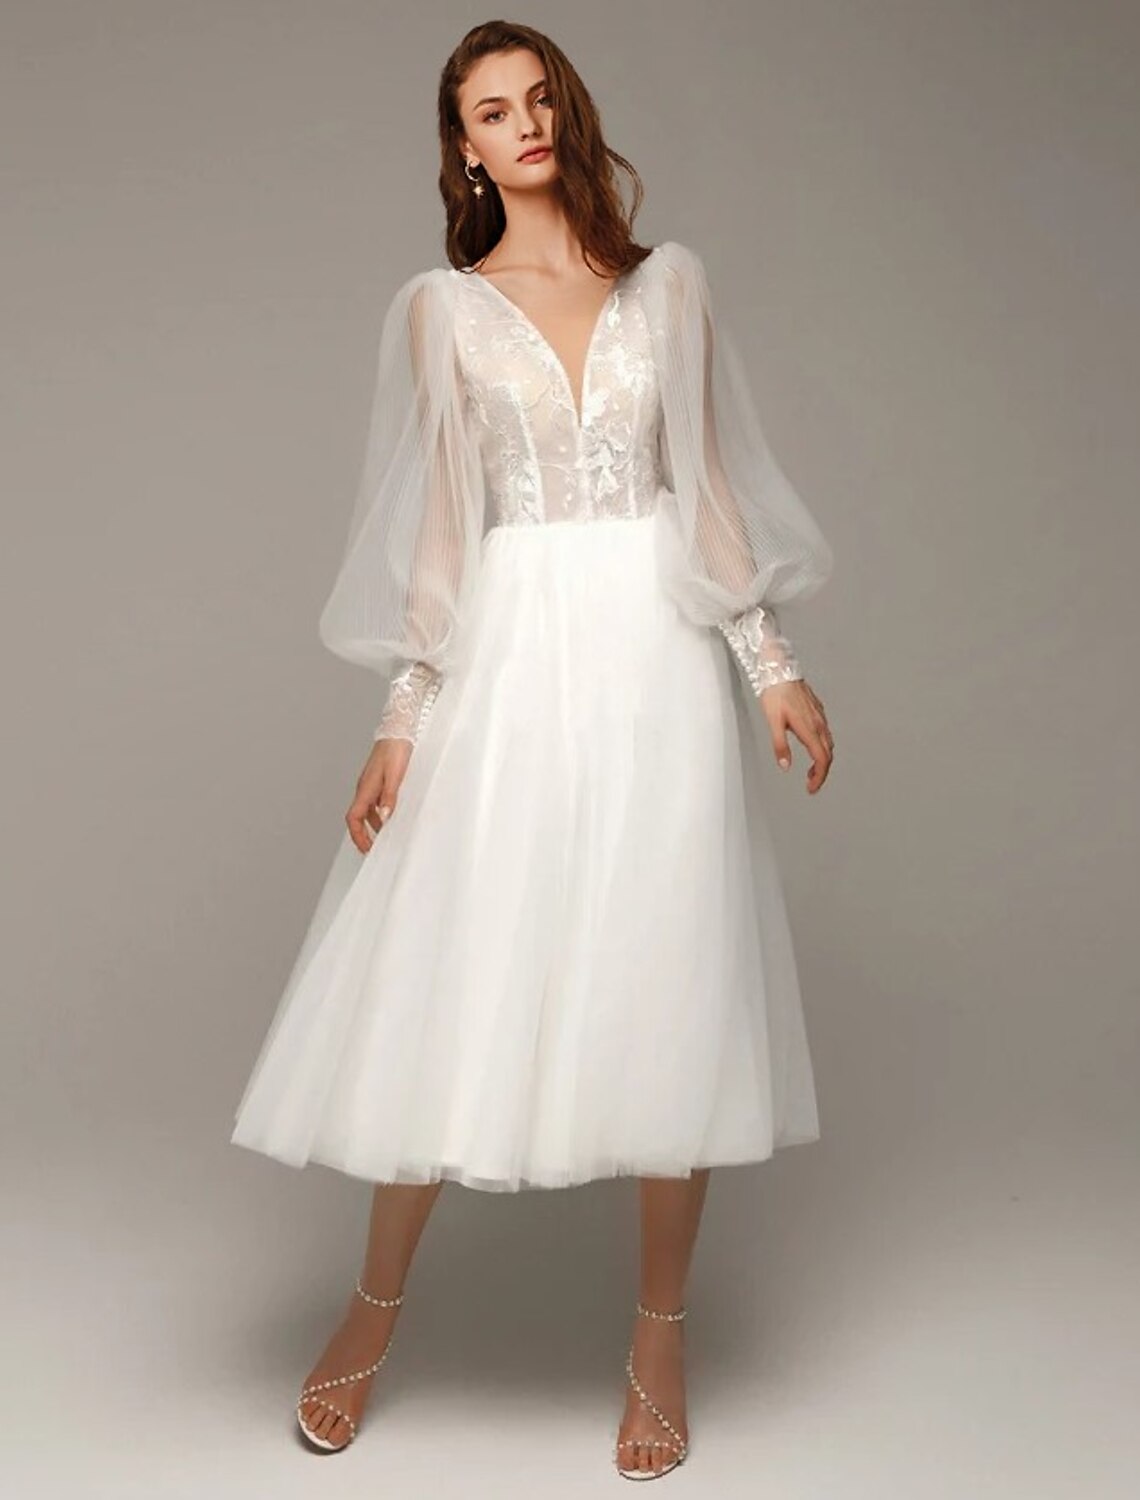 Hall Vintage 1940s / 1950s Little White Dresses Wedding Dresses A-Line V Neck Long Sleeve Tea Length Satin Bridal Gowns With Appliques Solid Color